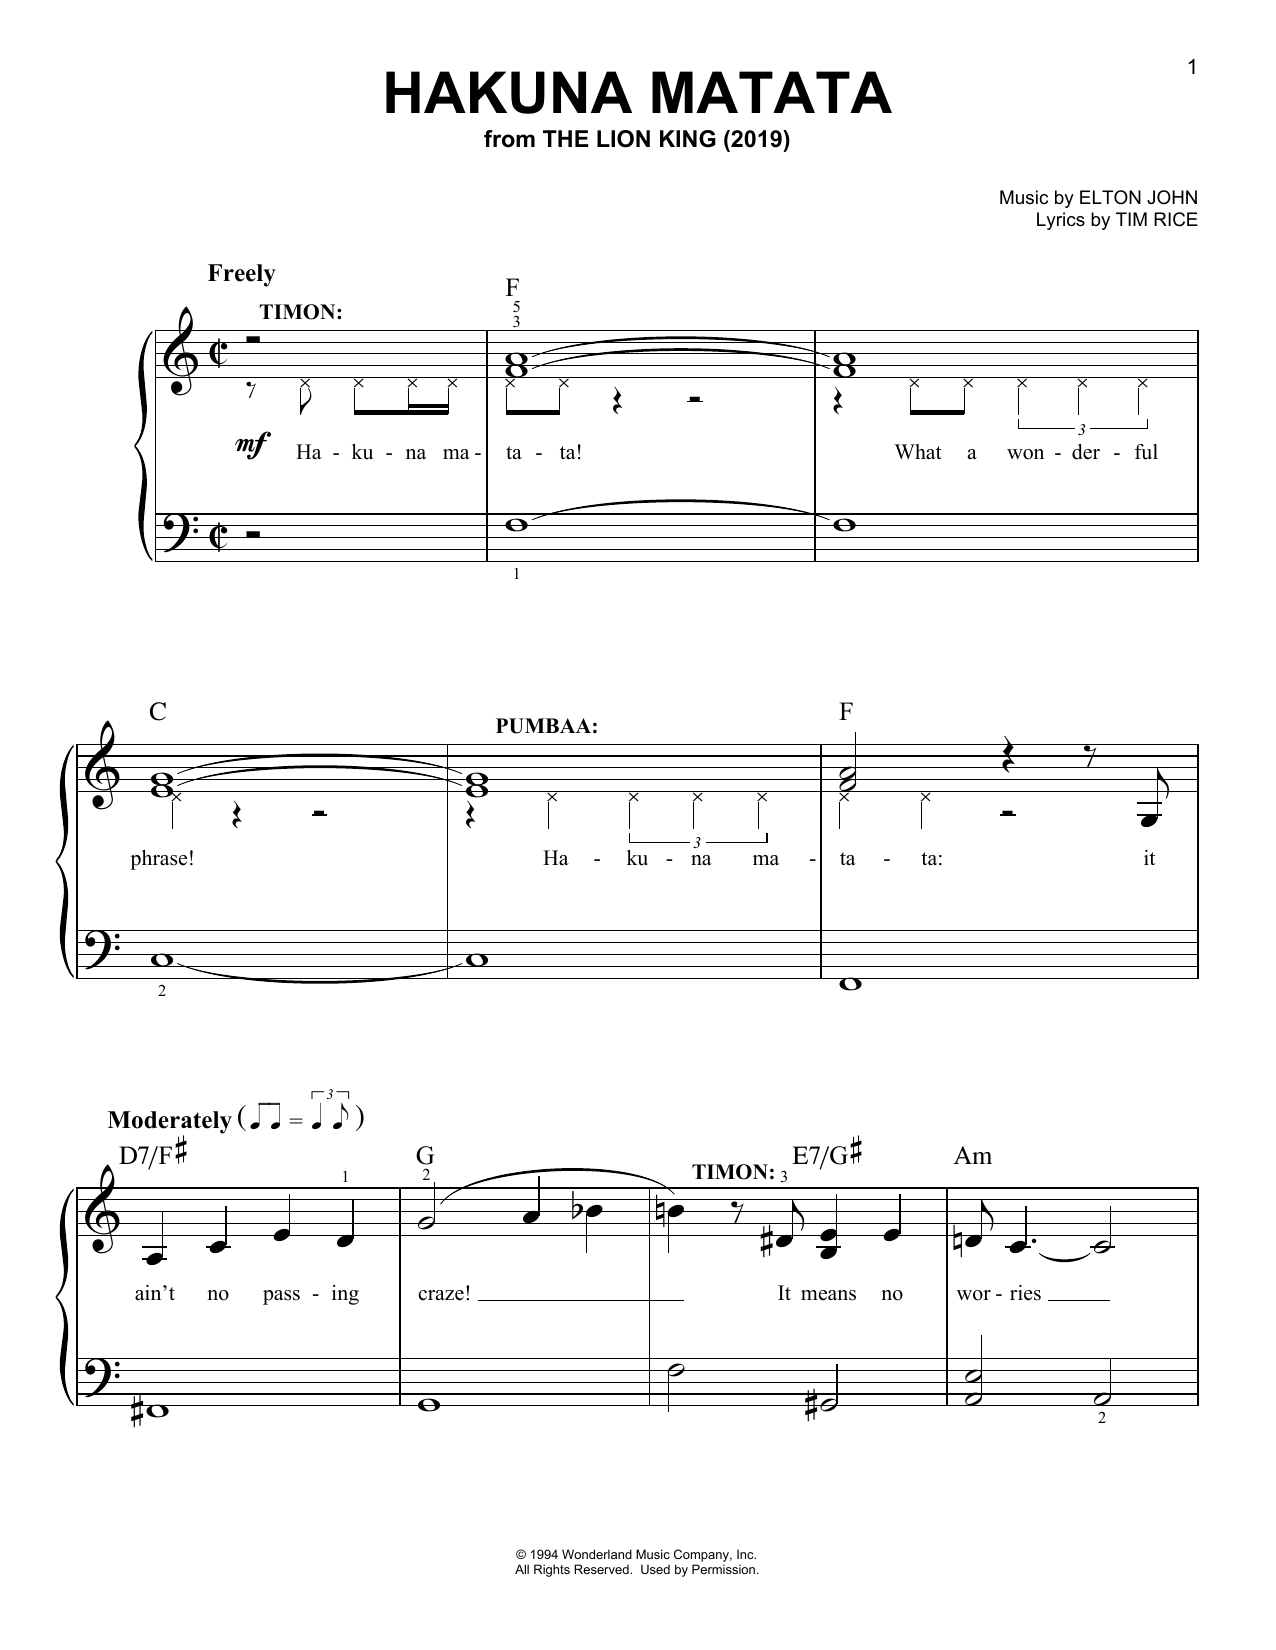 Elton John Hakuna Matata (from The Lion King 2019) Sheet Music Notes & Chords for Big Note Piano - Download or Print PDF